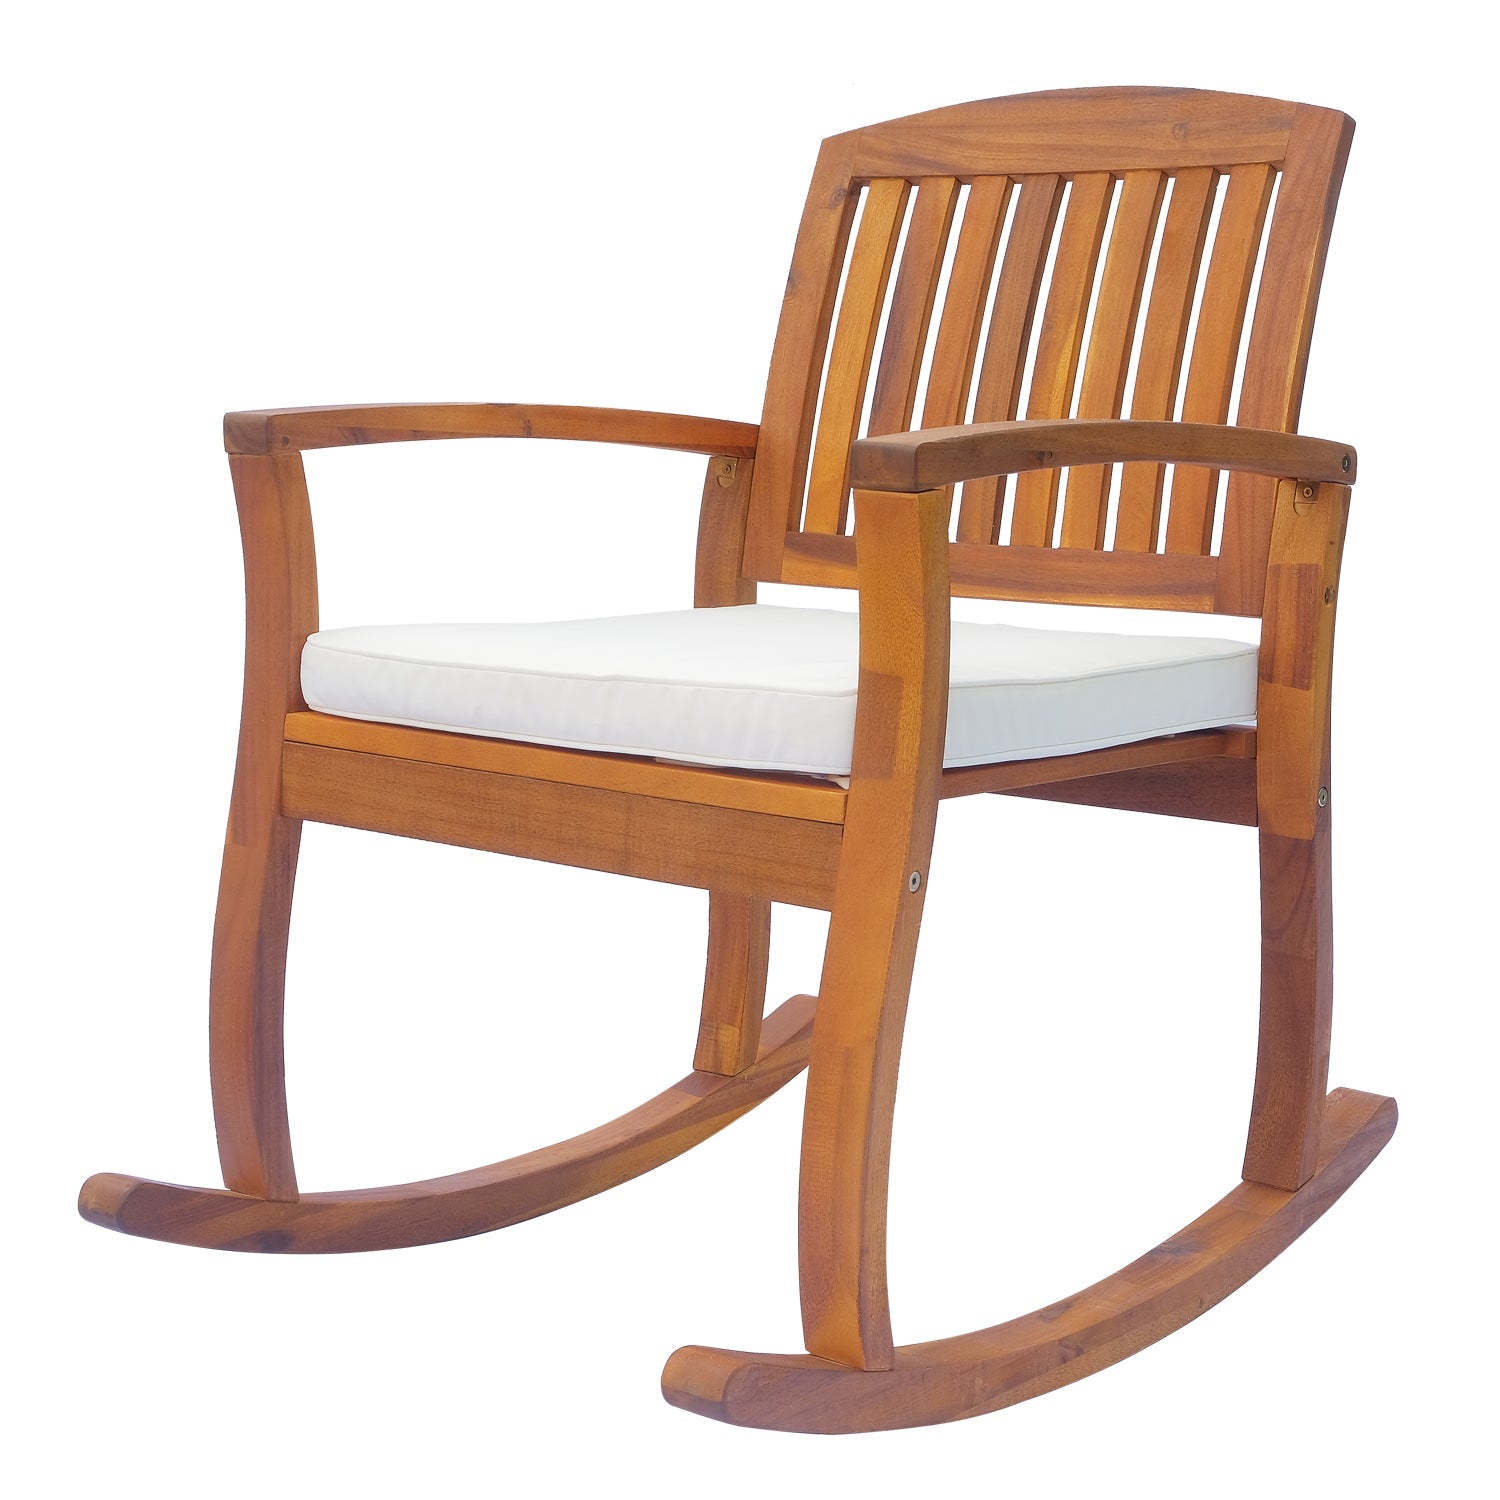 Garden Acacia Wood Rocking Chair Deck Indoor Outdoor Porch Seat Rocker with Cushion-0